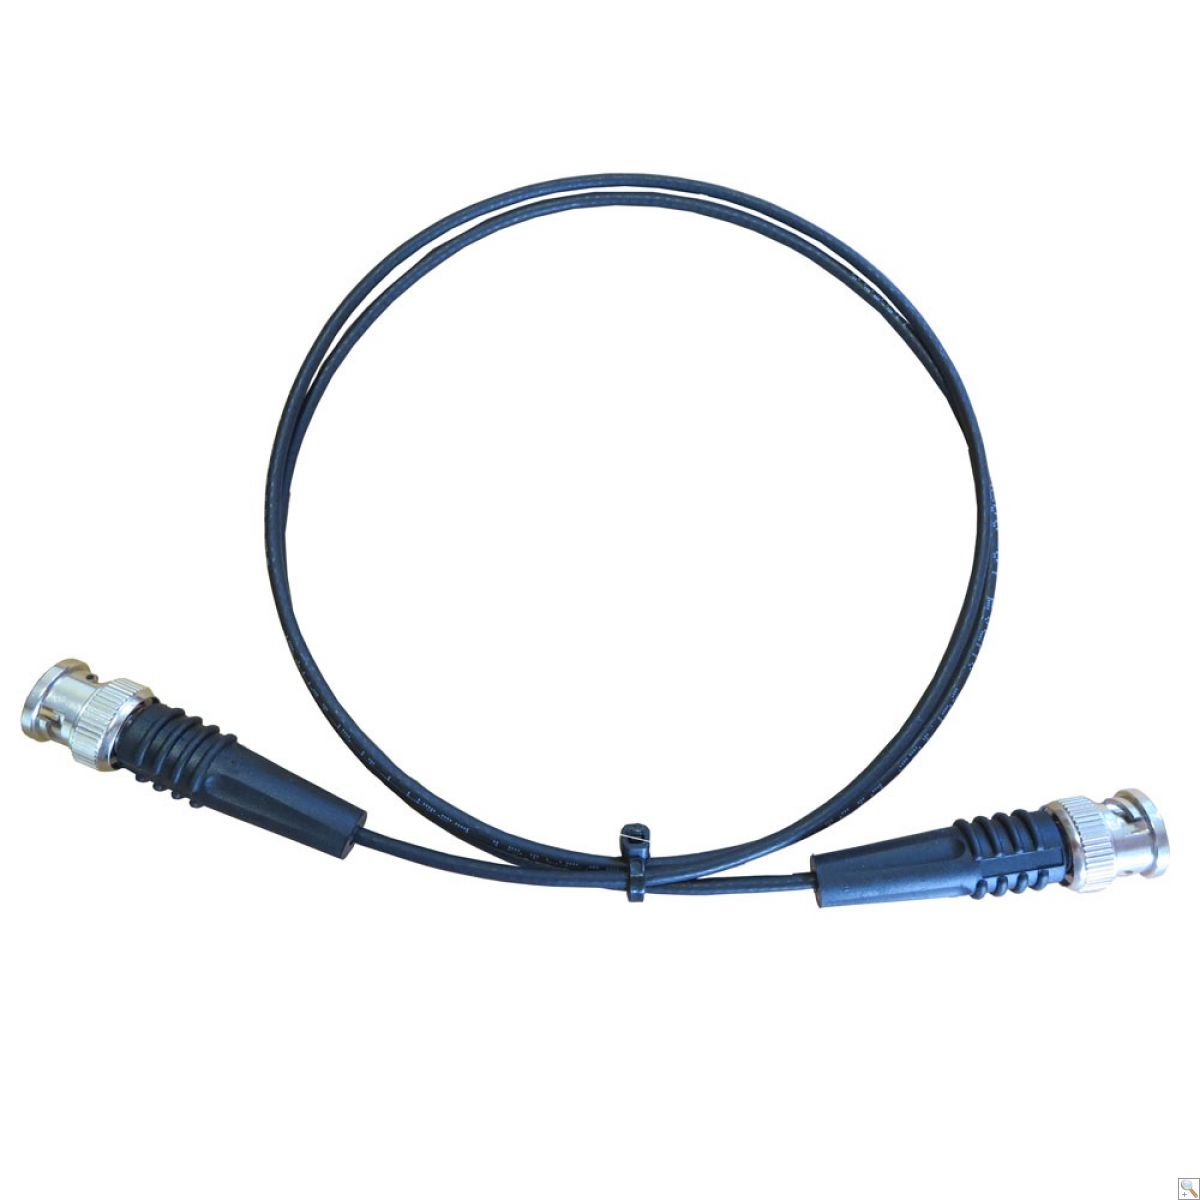 Belden 179DT cable assembly-3.0M